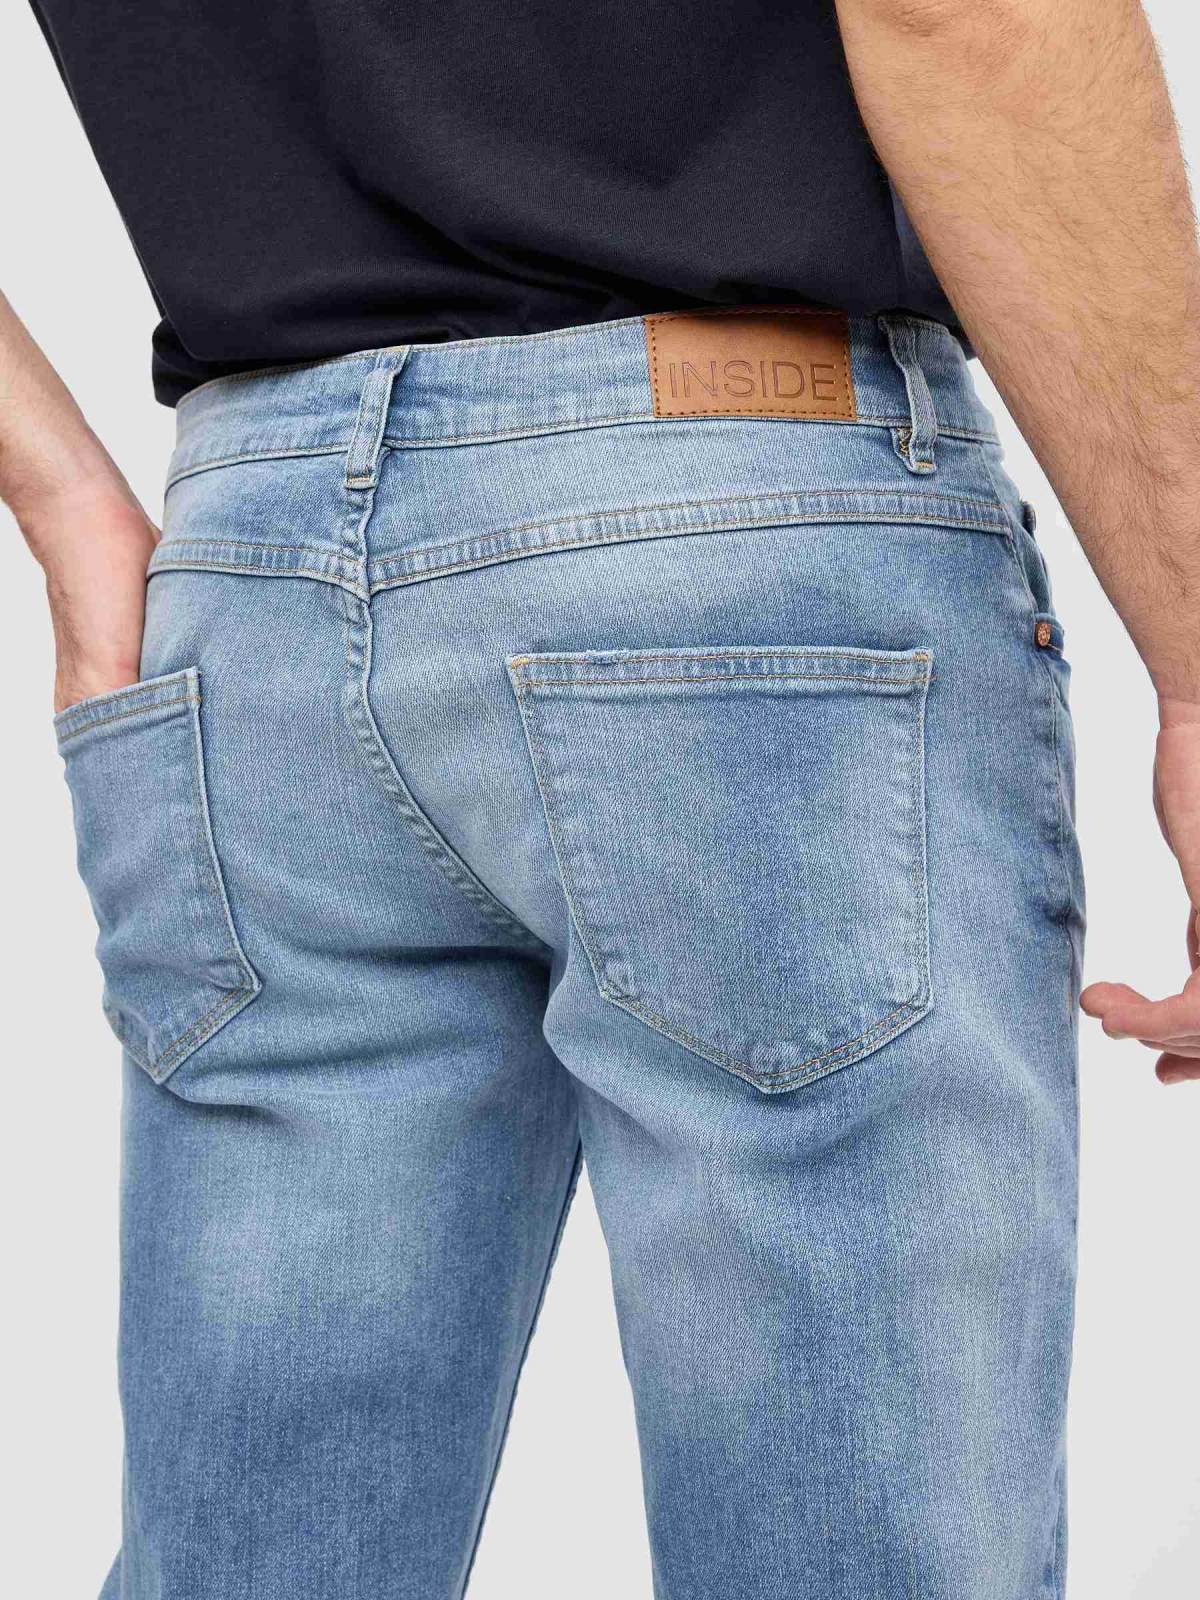 Jeans slim fit azul claro uniforme azul vista detalhe